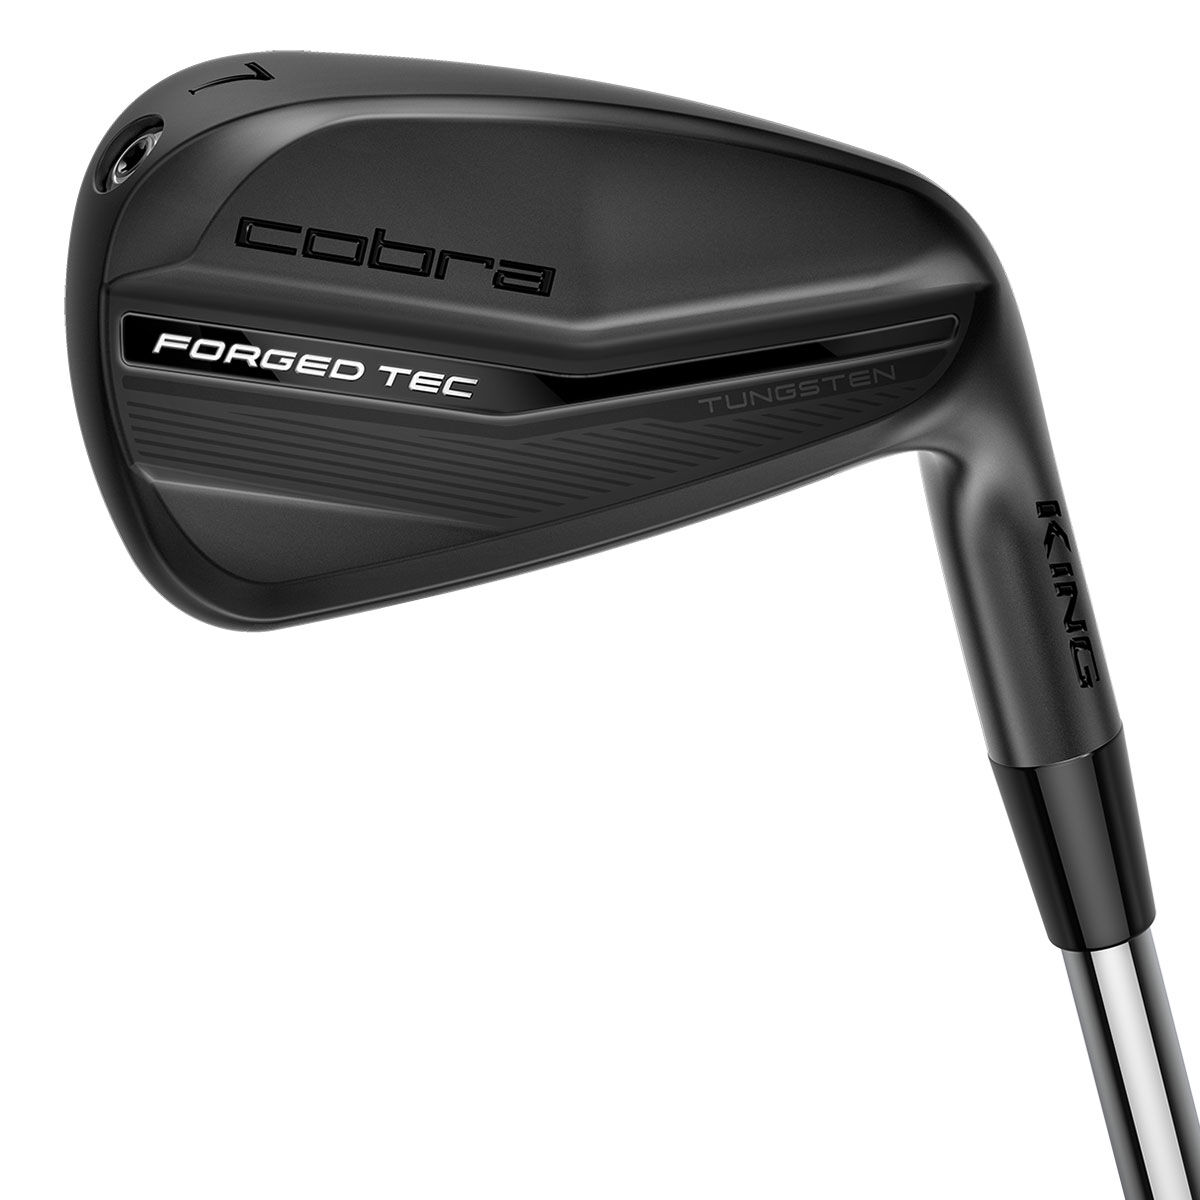 Cobra Golf Golf Irons, Mens Black King Forged TEC Steel Right Hand 4-pw 7, Size: Stiff | American Golf, 4pw von Cobra Golf